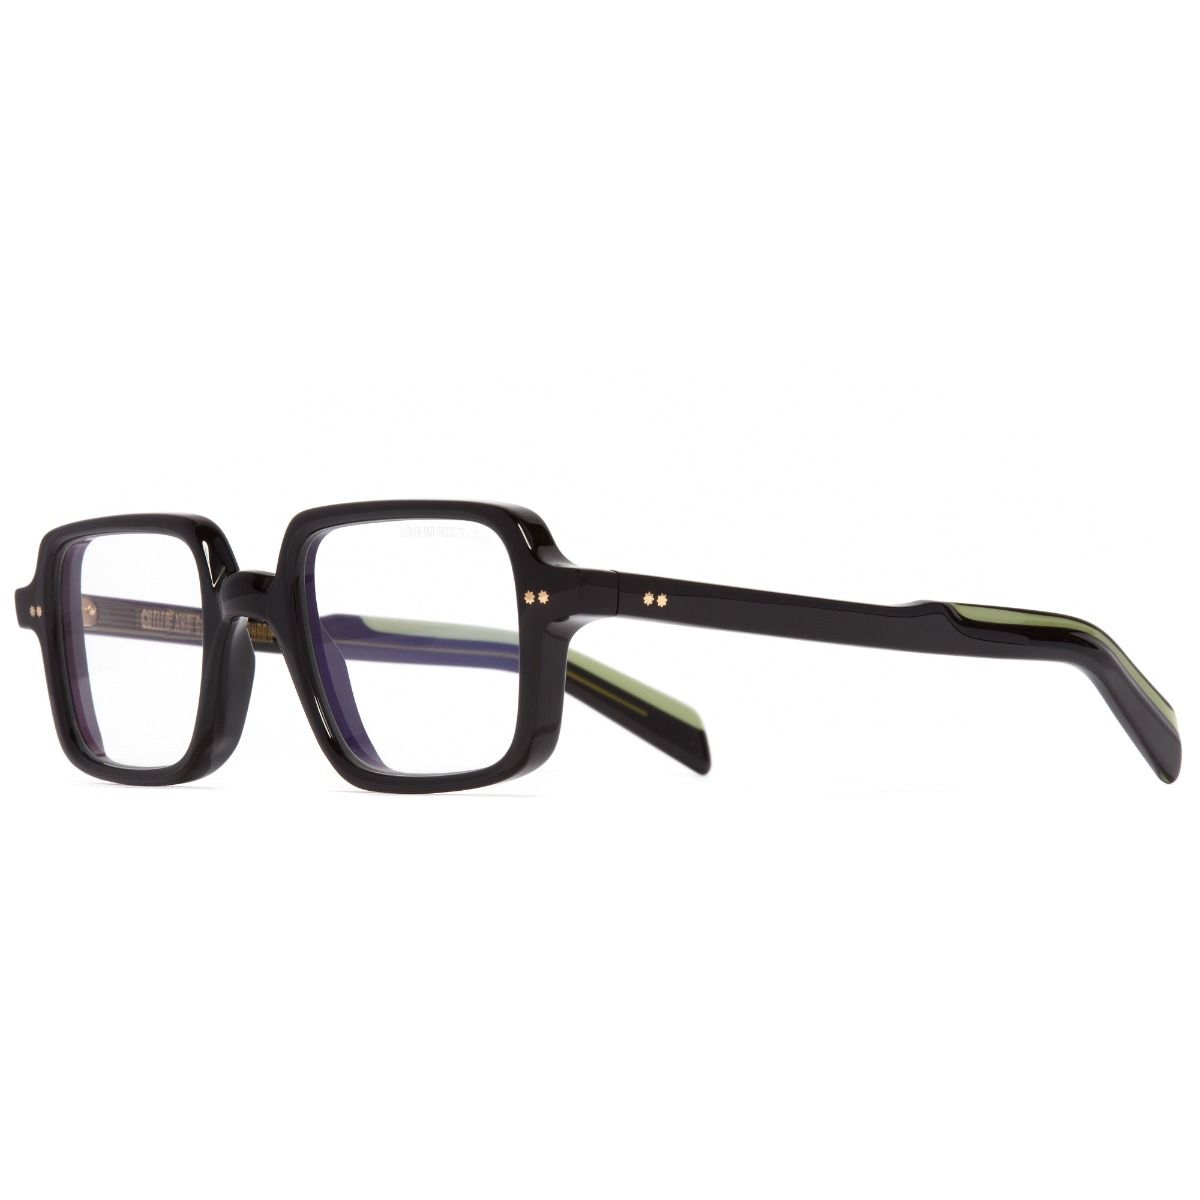 GR02 Rectangle Optical Glasses - Black